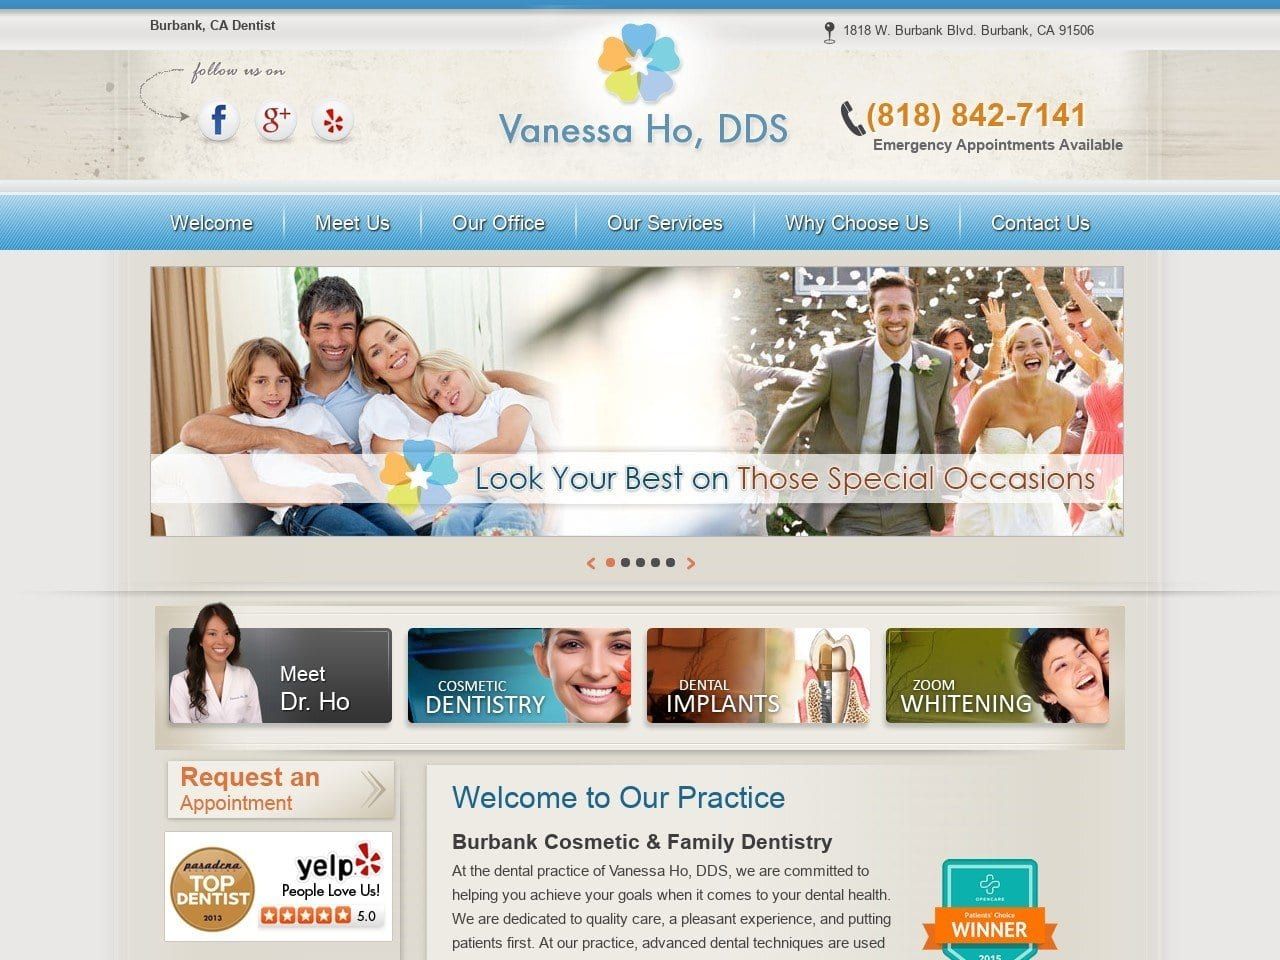 Vanessa Ho DDS Website Screenshot from vanessahodds.com